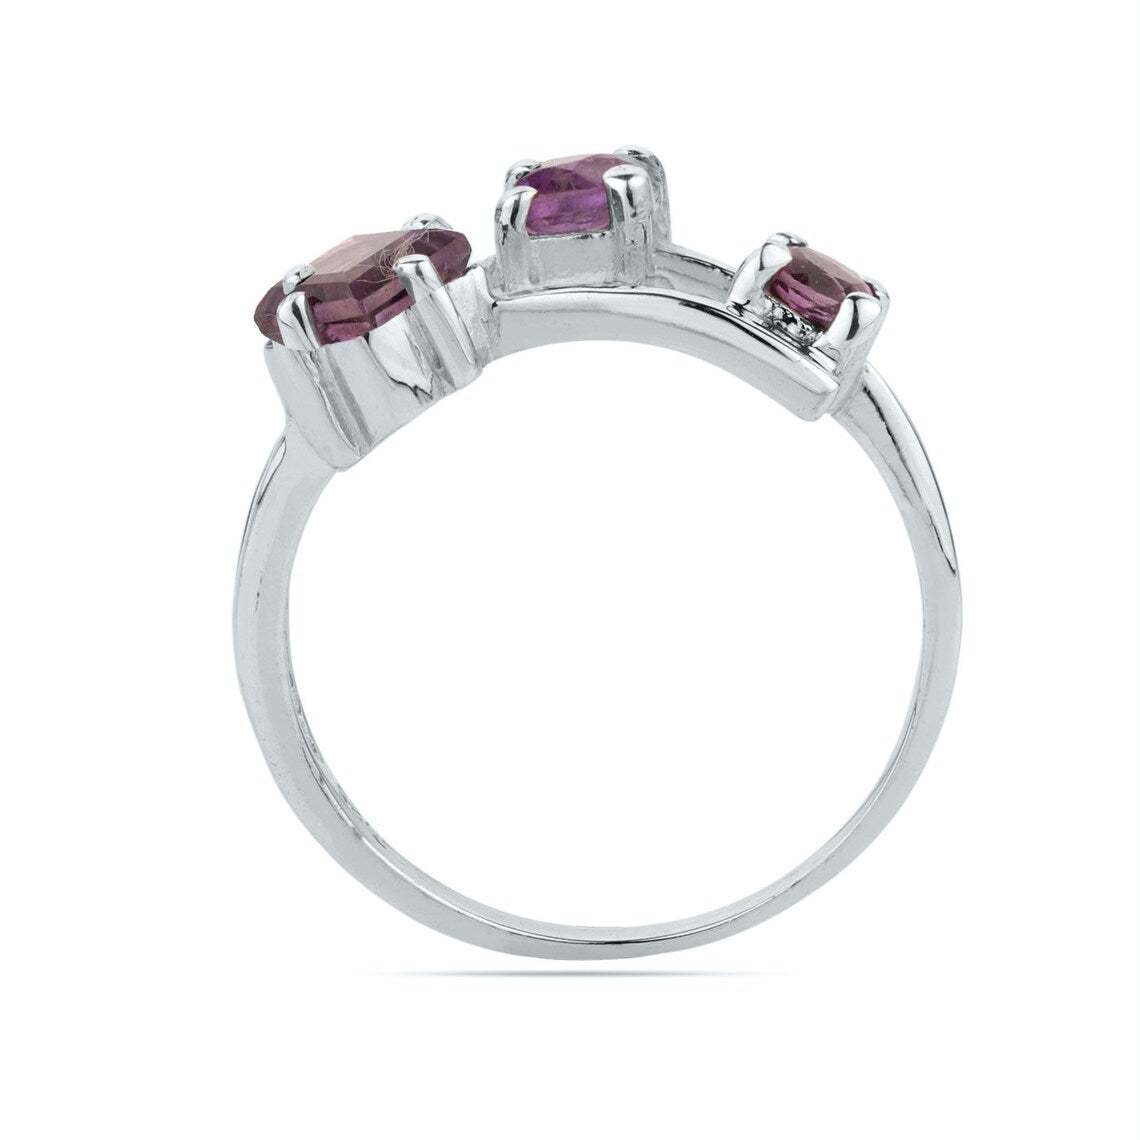 Amethyst Prong Ring - Amethyst Gemstone Ring - 925 Sterling Silver - Multi Amethyst Rose Cut Ring